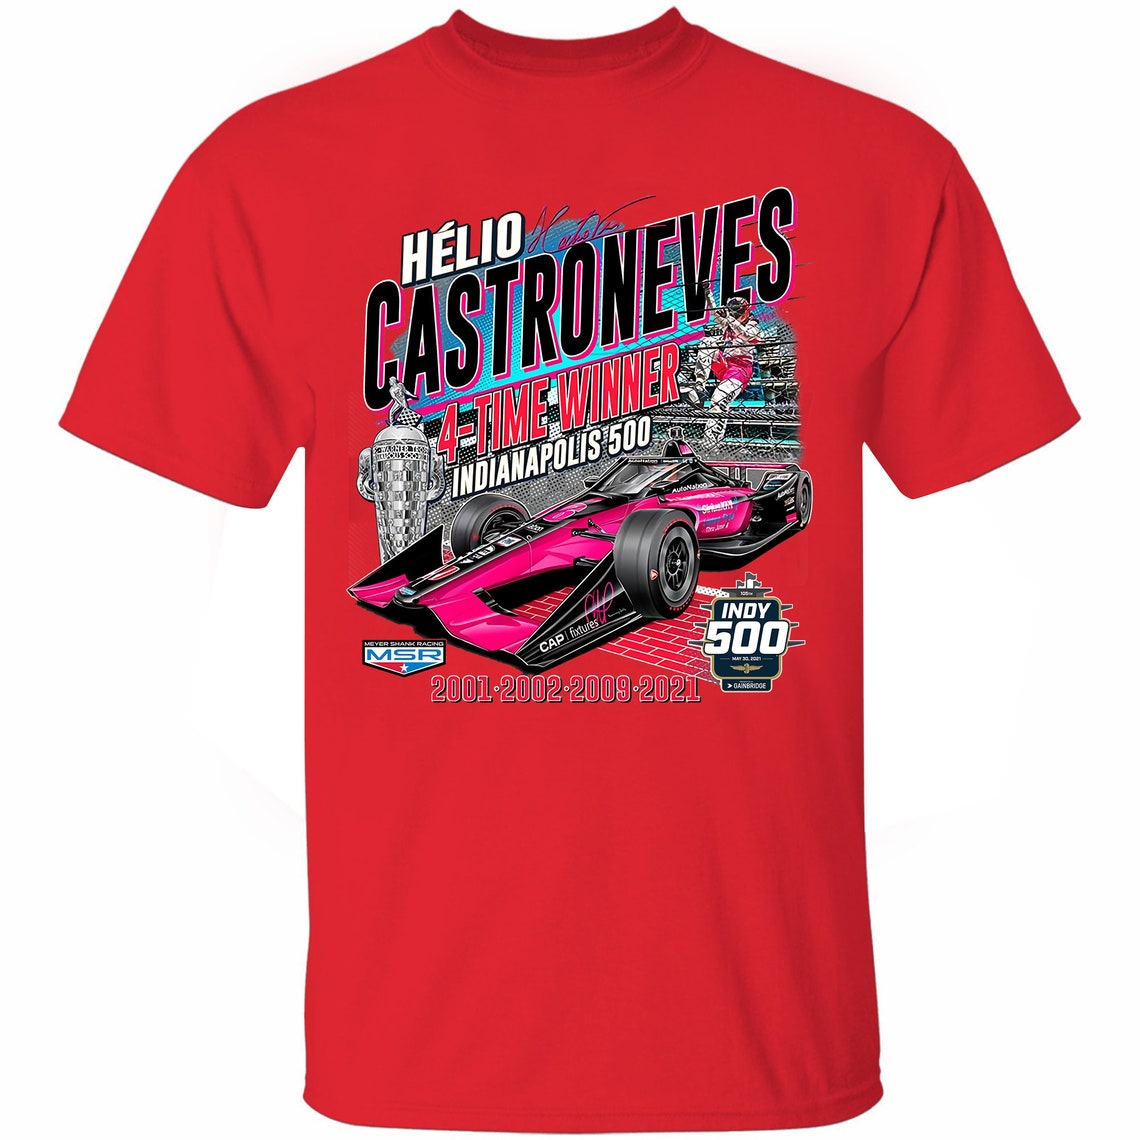 helio castroneves shirt